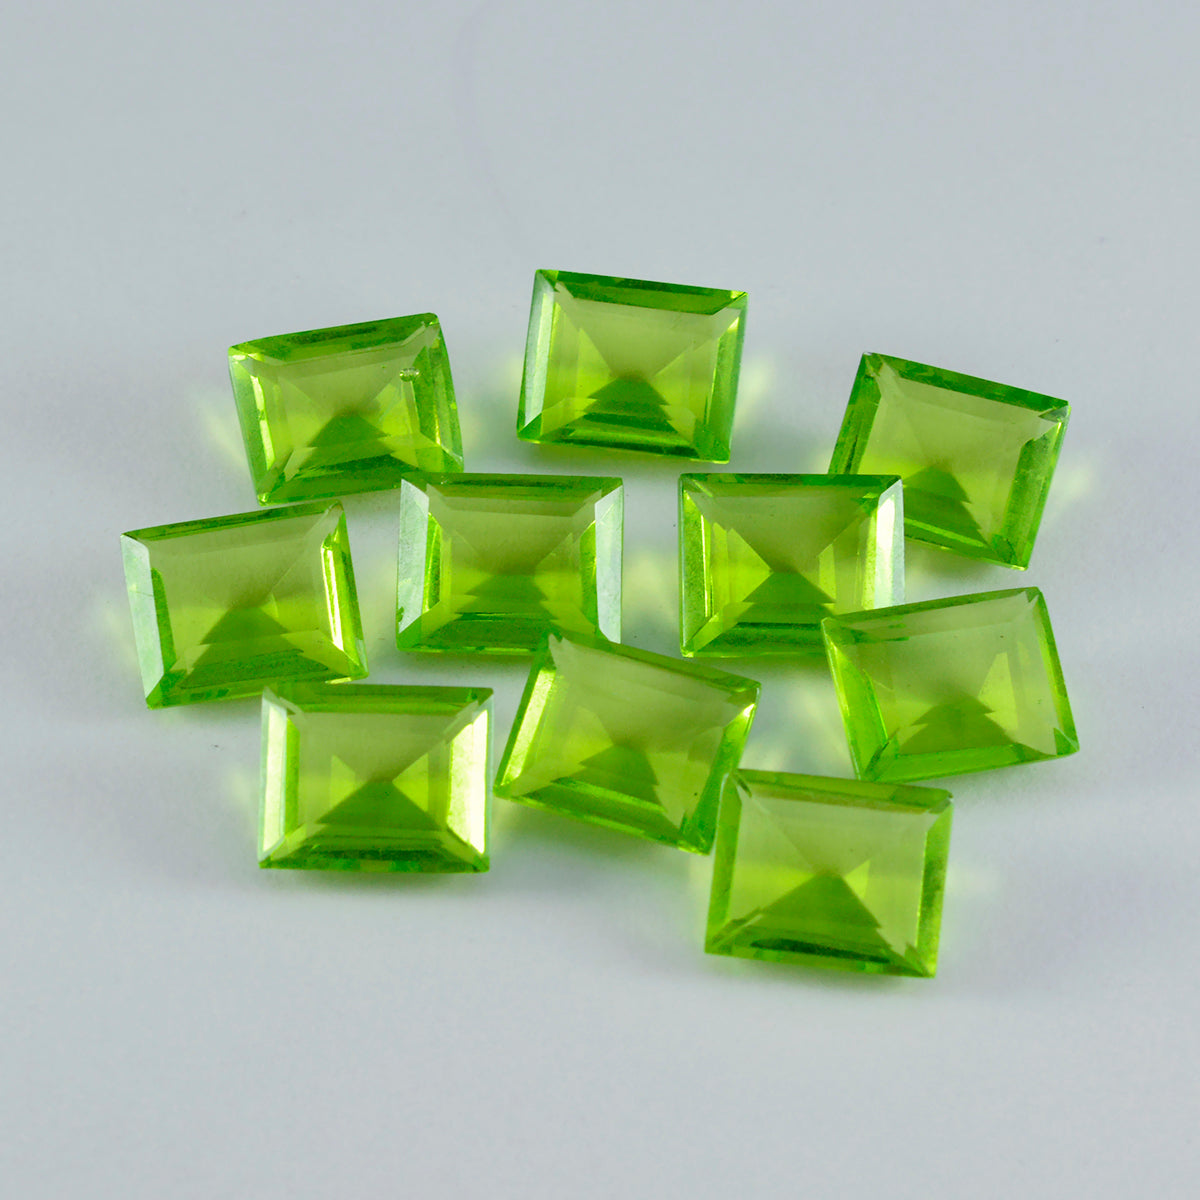 riyogems 1 st grön peridot cz fasetterad 6x8 mm oktagonform häpnadsväckande kvalitetssten